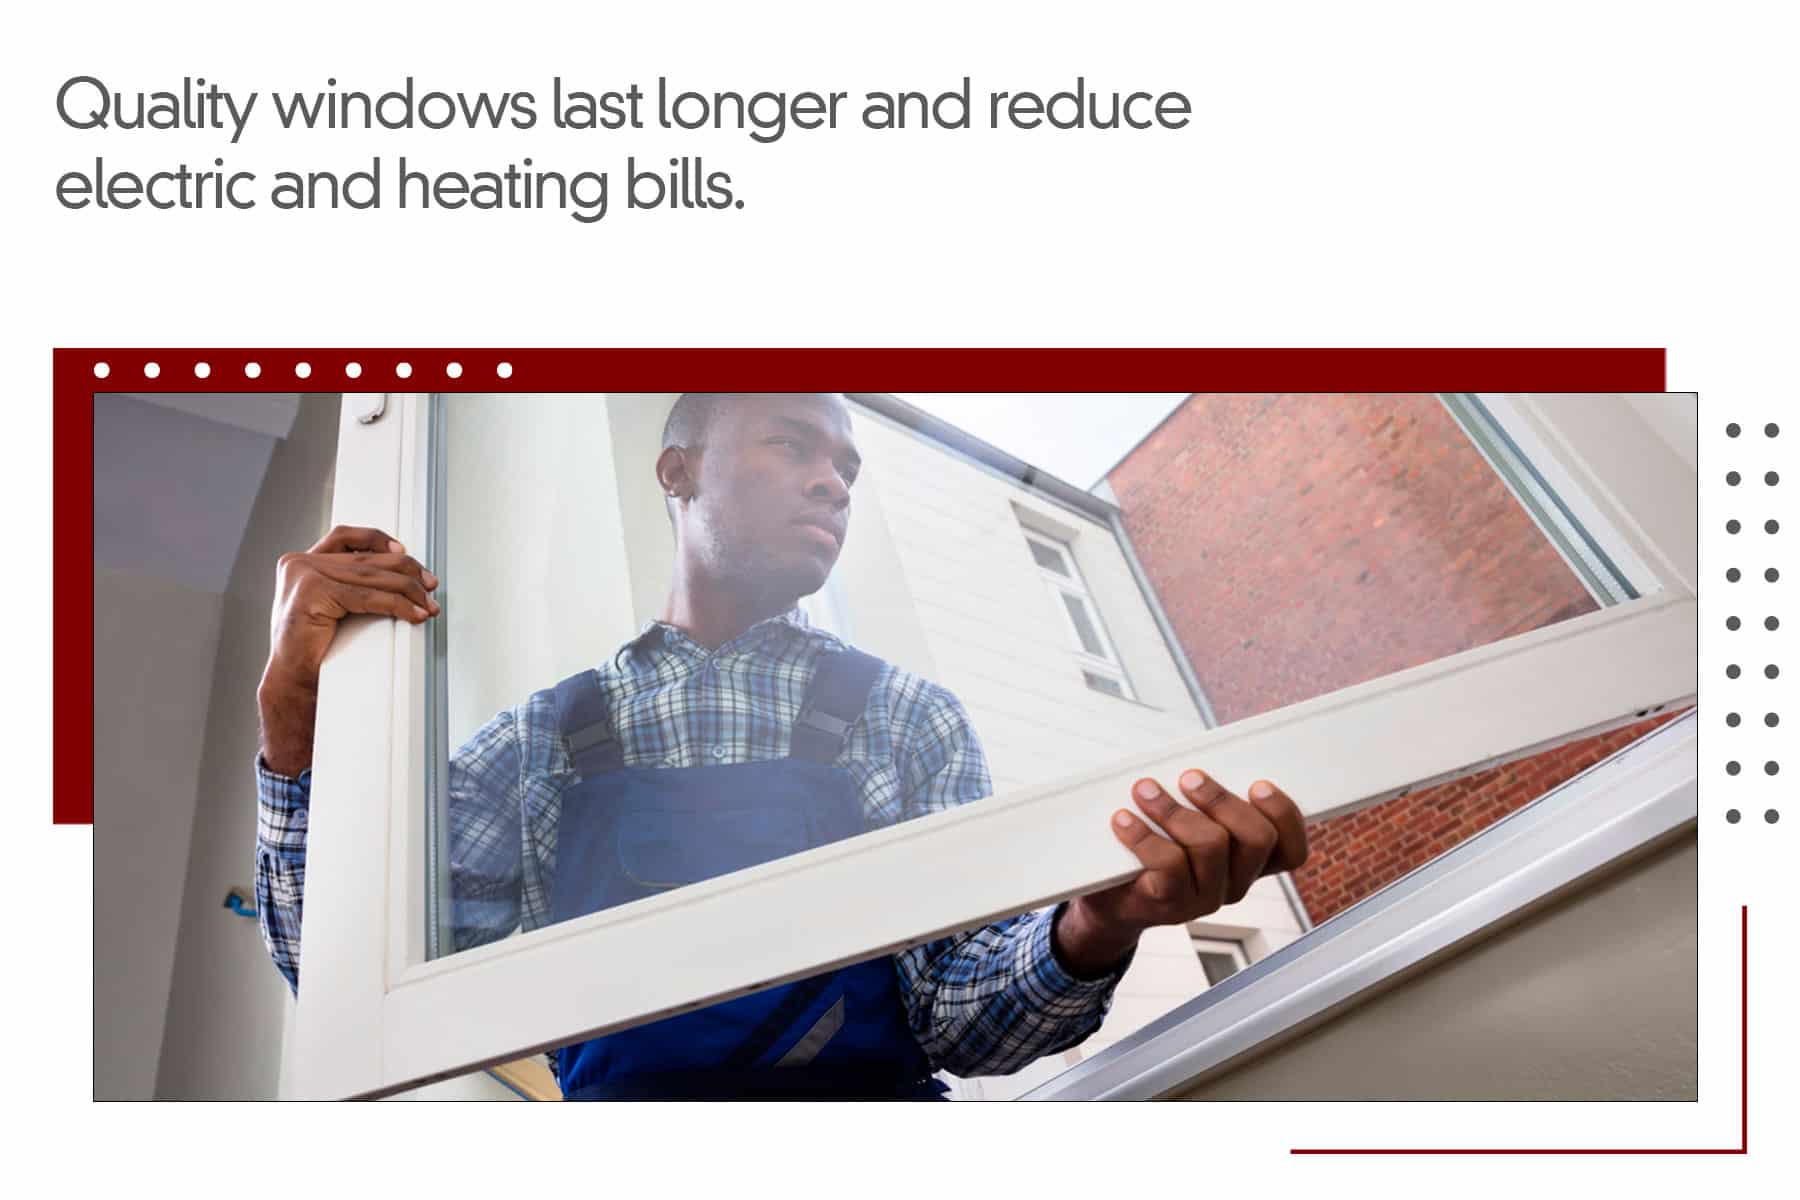 quality window reduce electric bills